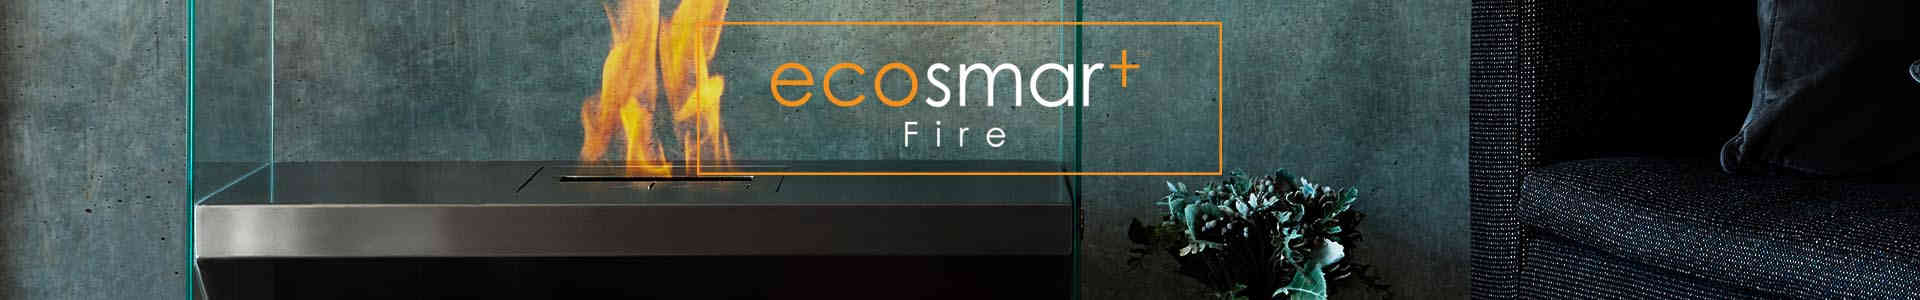 EcoSmart Fire Bioethanol Designer Fireplaces